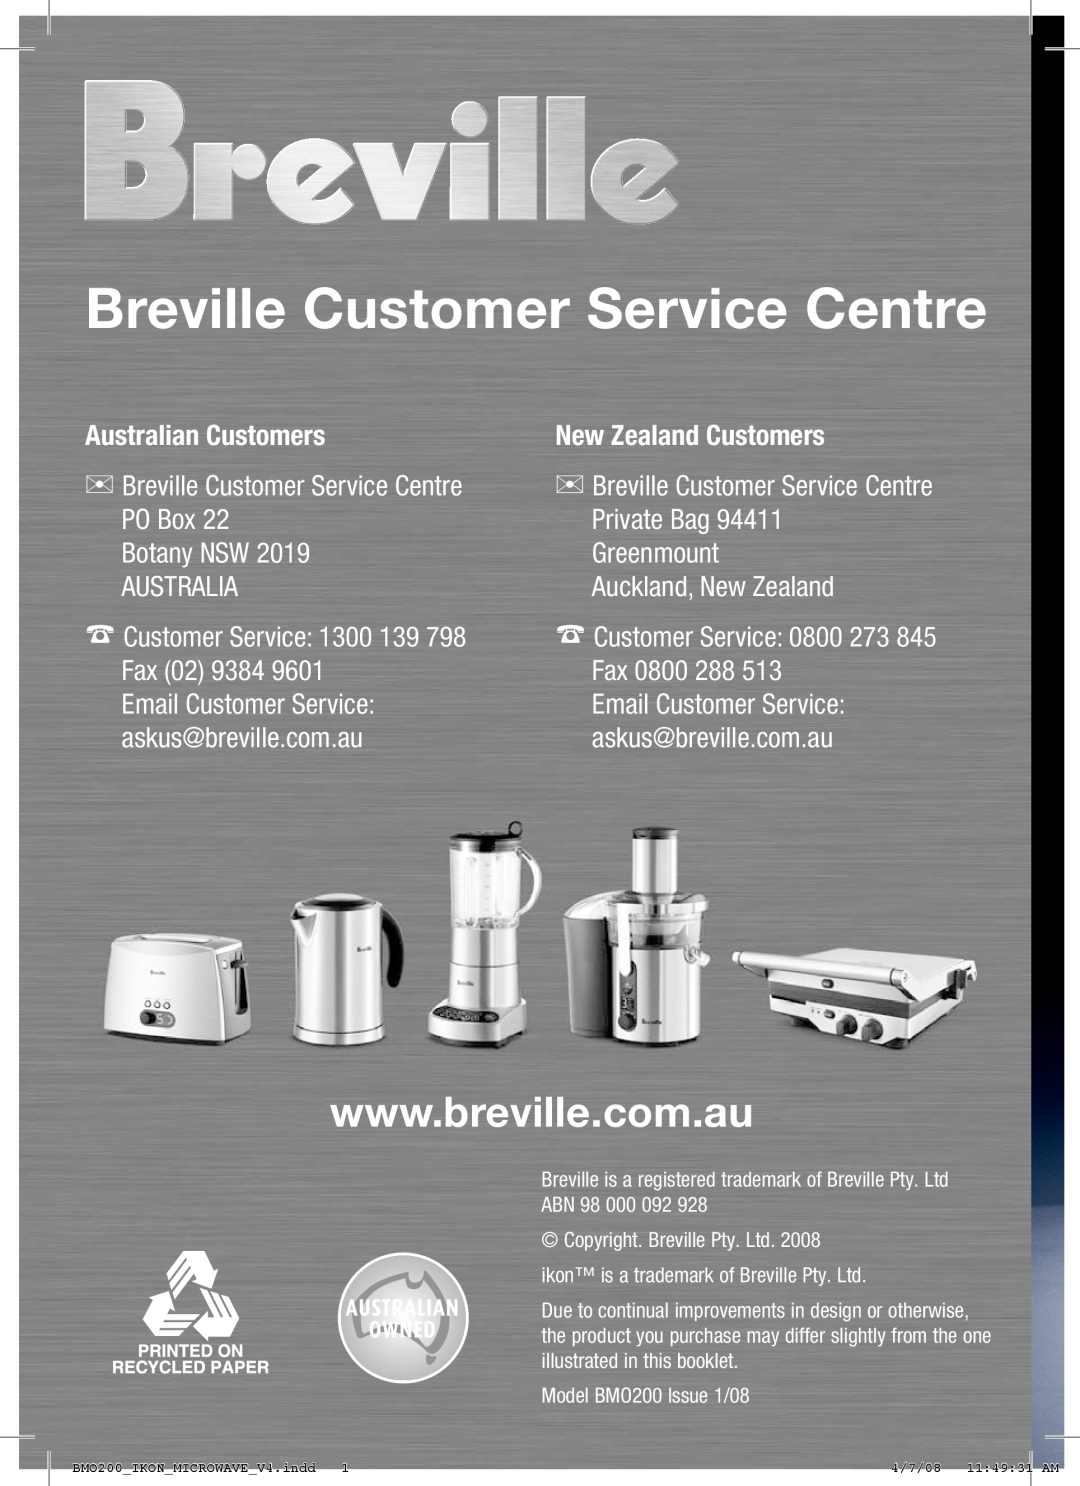 Breville BM0200 manual Australian Customers, New Zealand Customers, Breville Customer Service Centre 